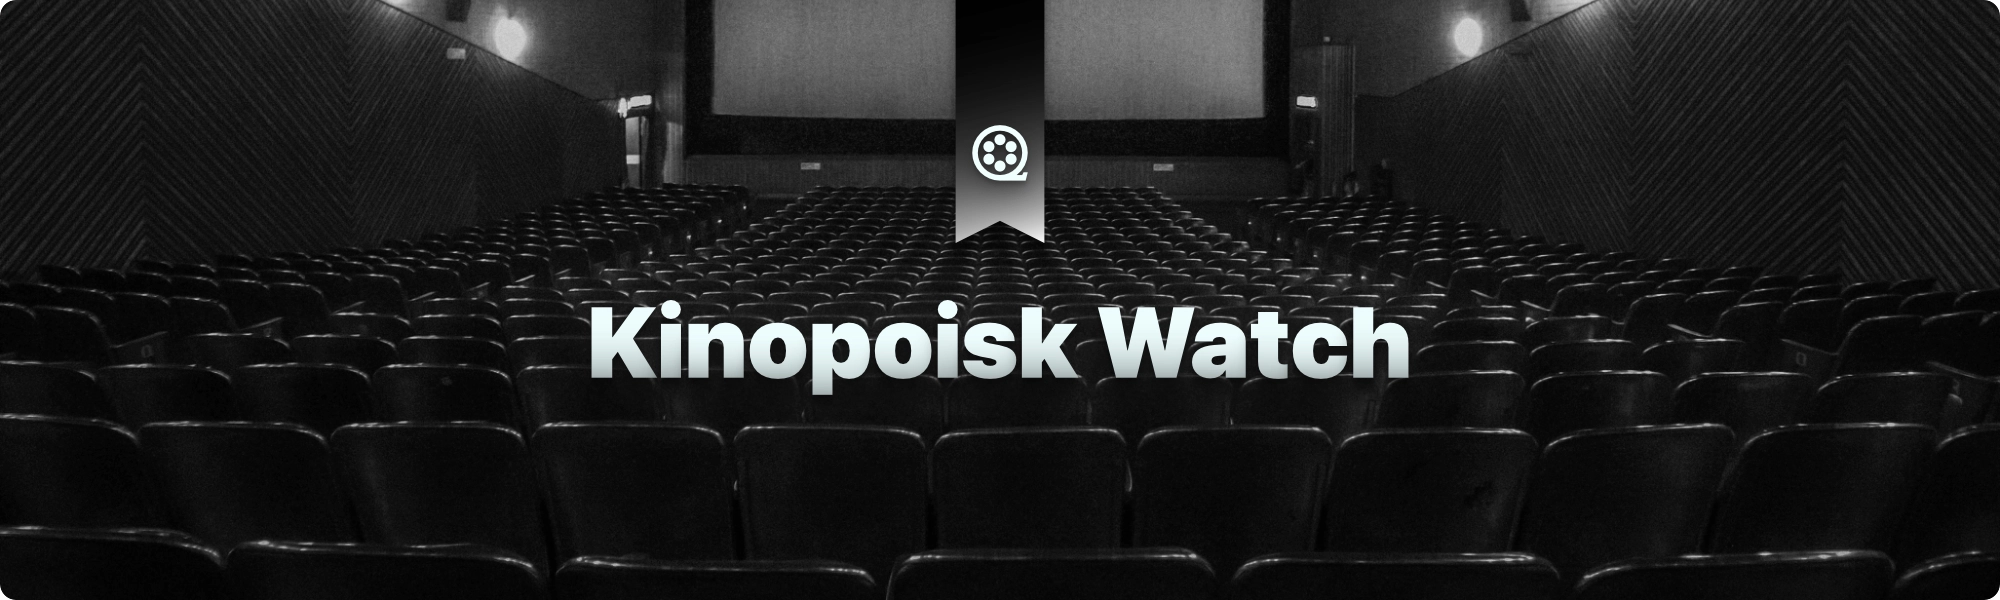 Kinopoisk Watch Logo